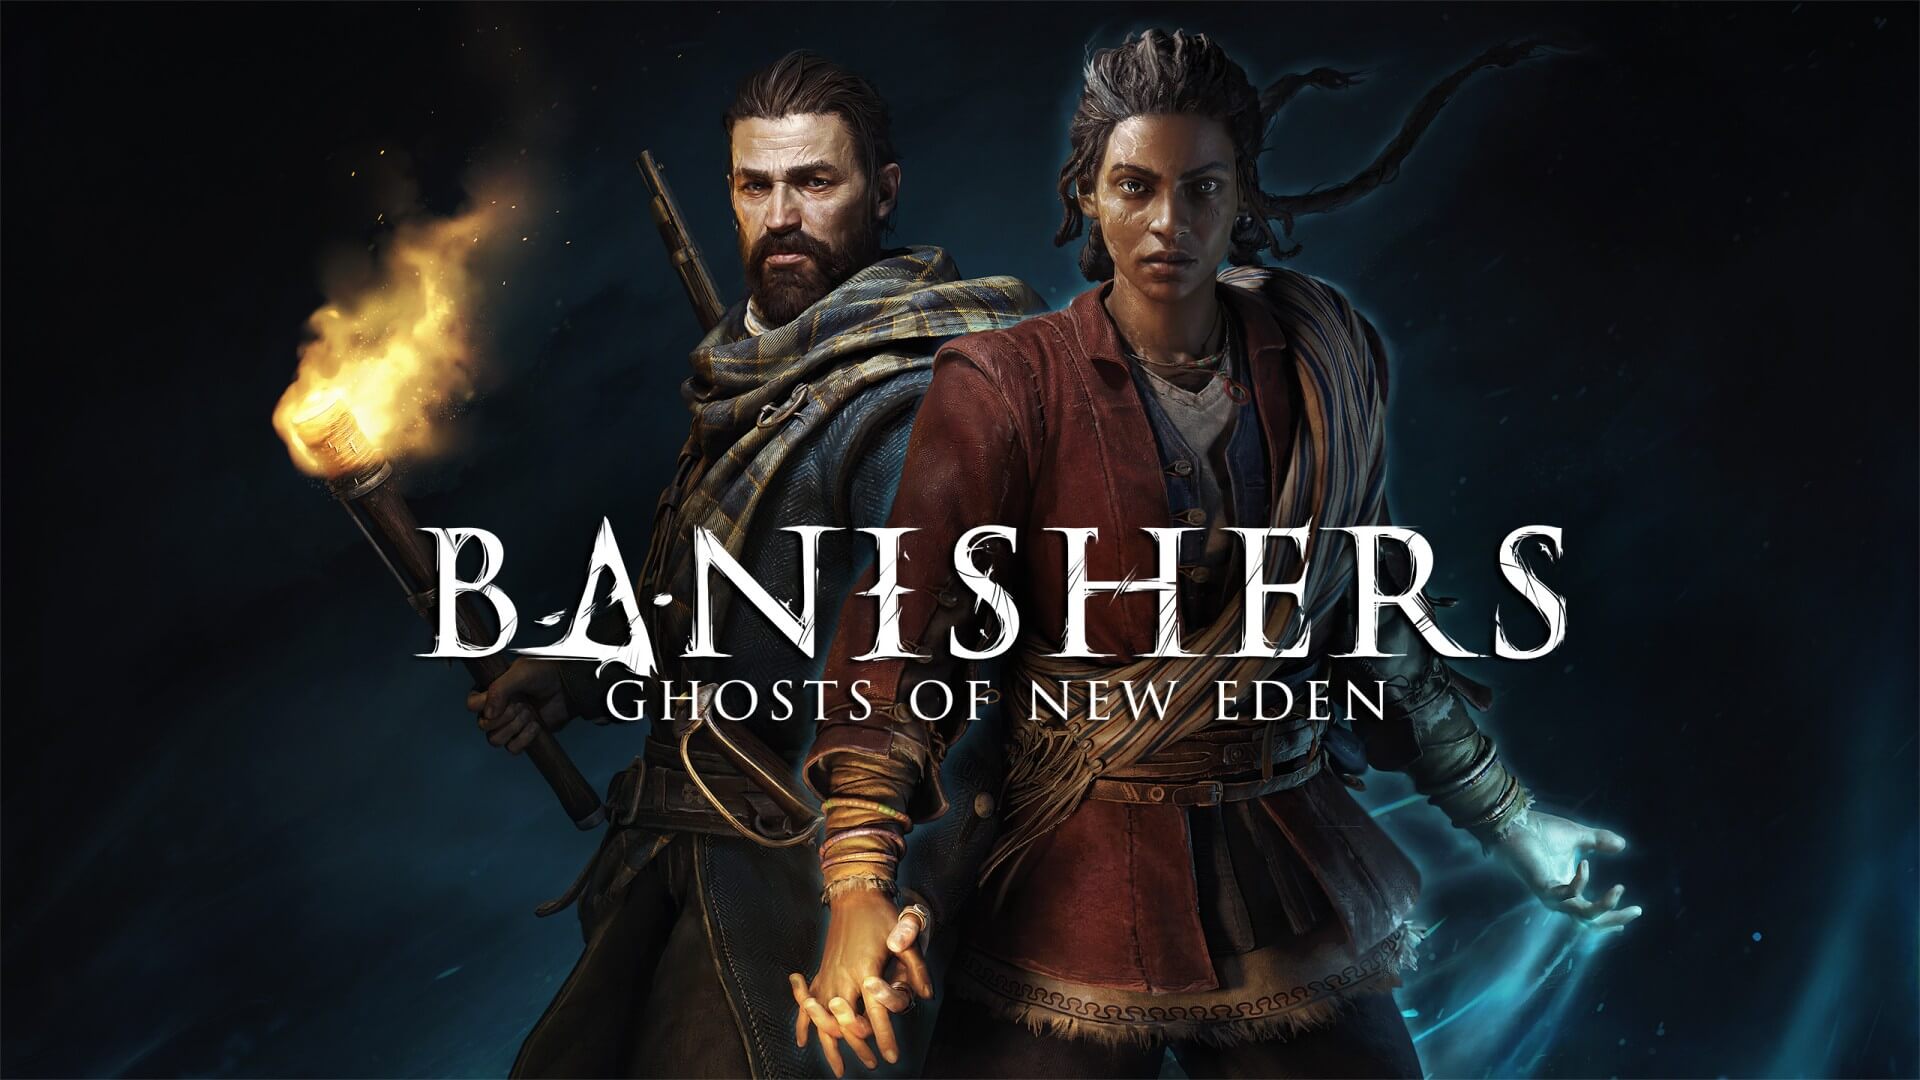 Banishers ghosts of new eden системные требования. Banishers: Ghosts of New Eden. Banishers Ghost of Eden. Banishers Ghost of New Eden game. Banishers: Ghosts of New Eden призрак.